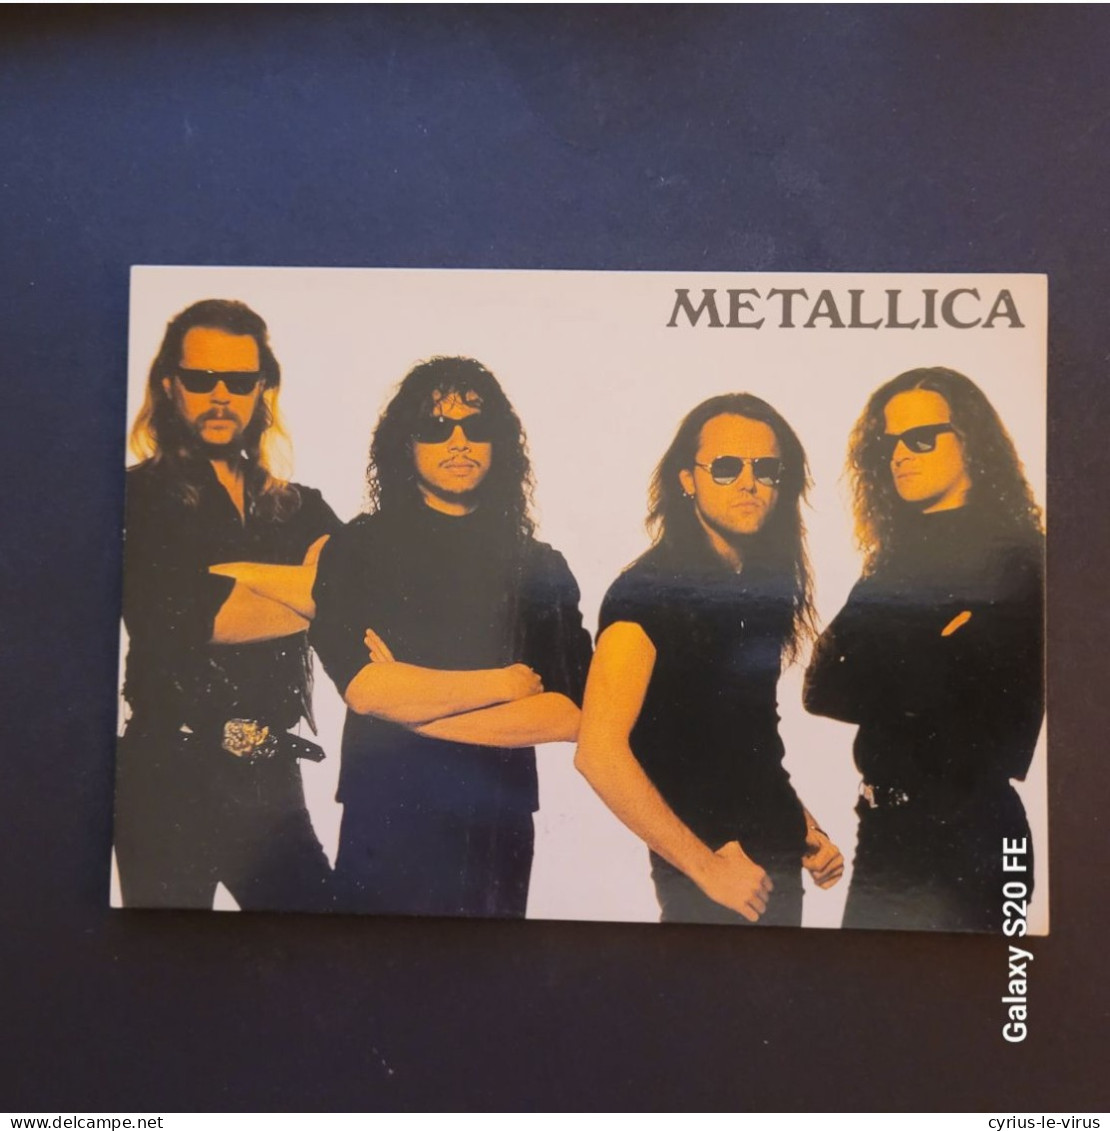 Hard-Rock  ** Metallica  ** - Musik Und Musikanten